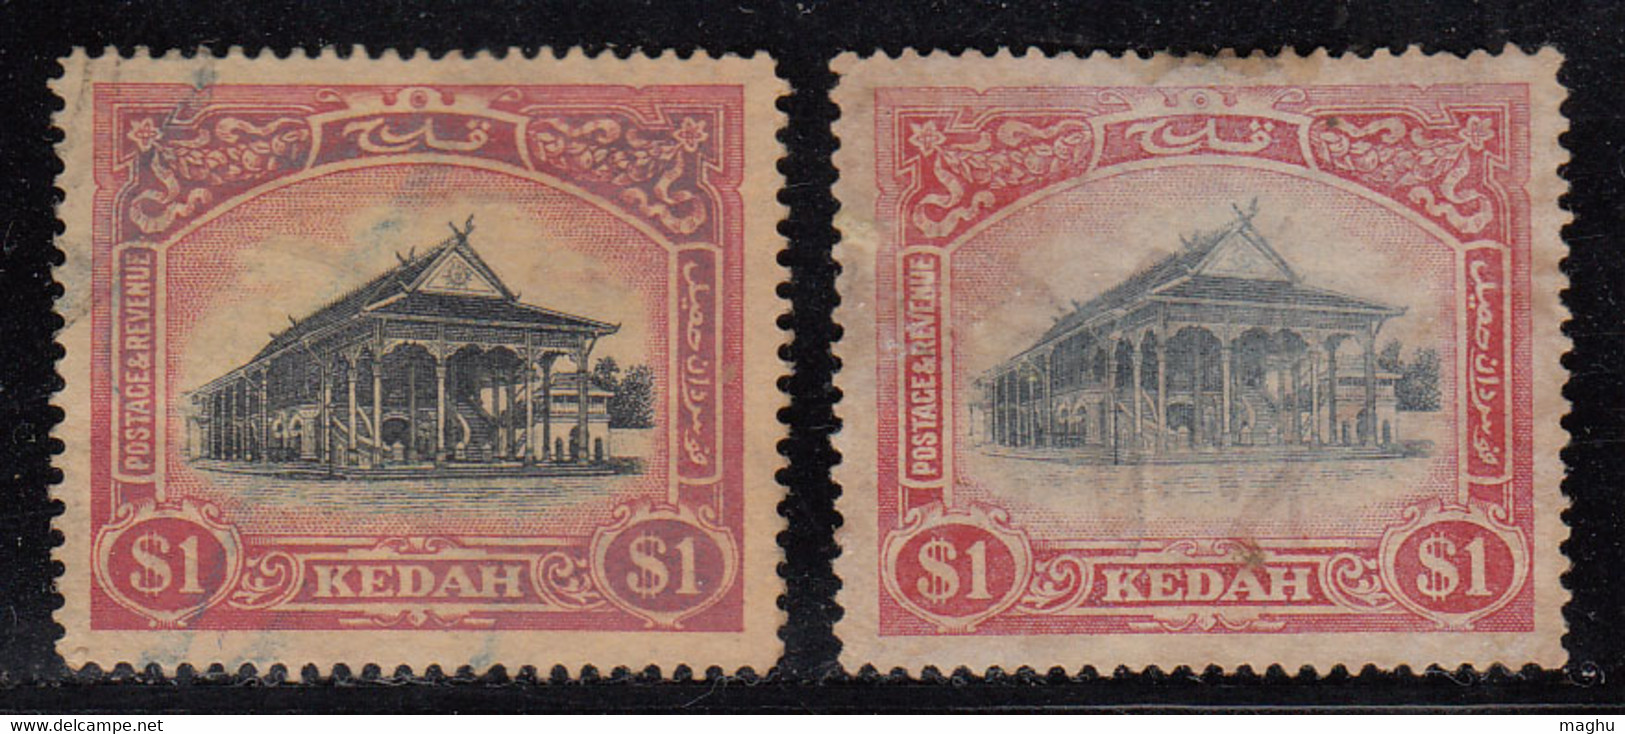 $1 Kedah Used 1921, Shade Variety, Malaya / Malaysia - Kedah